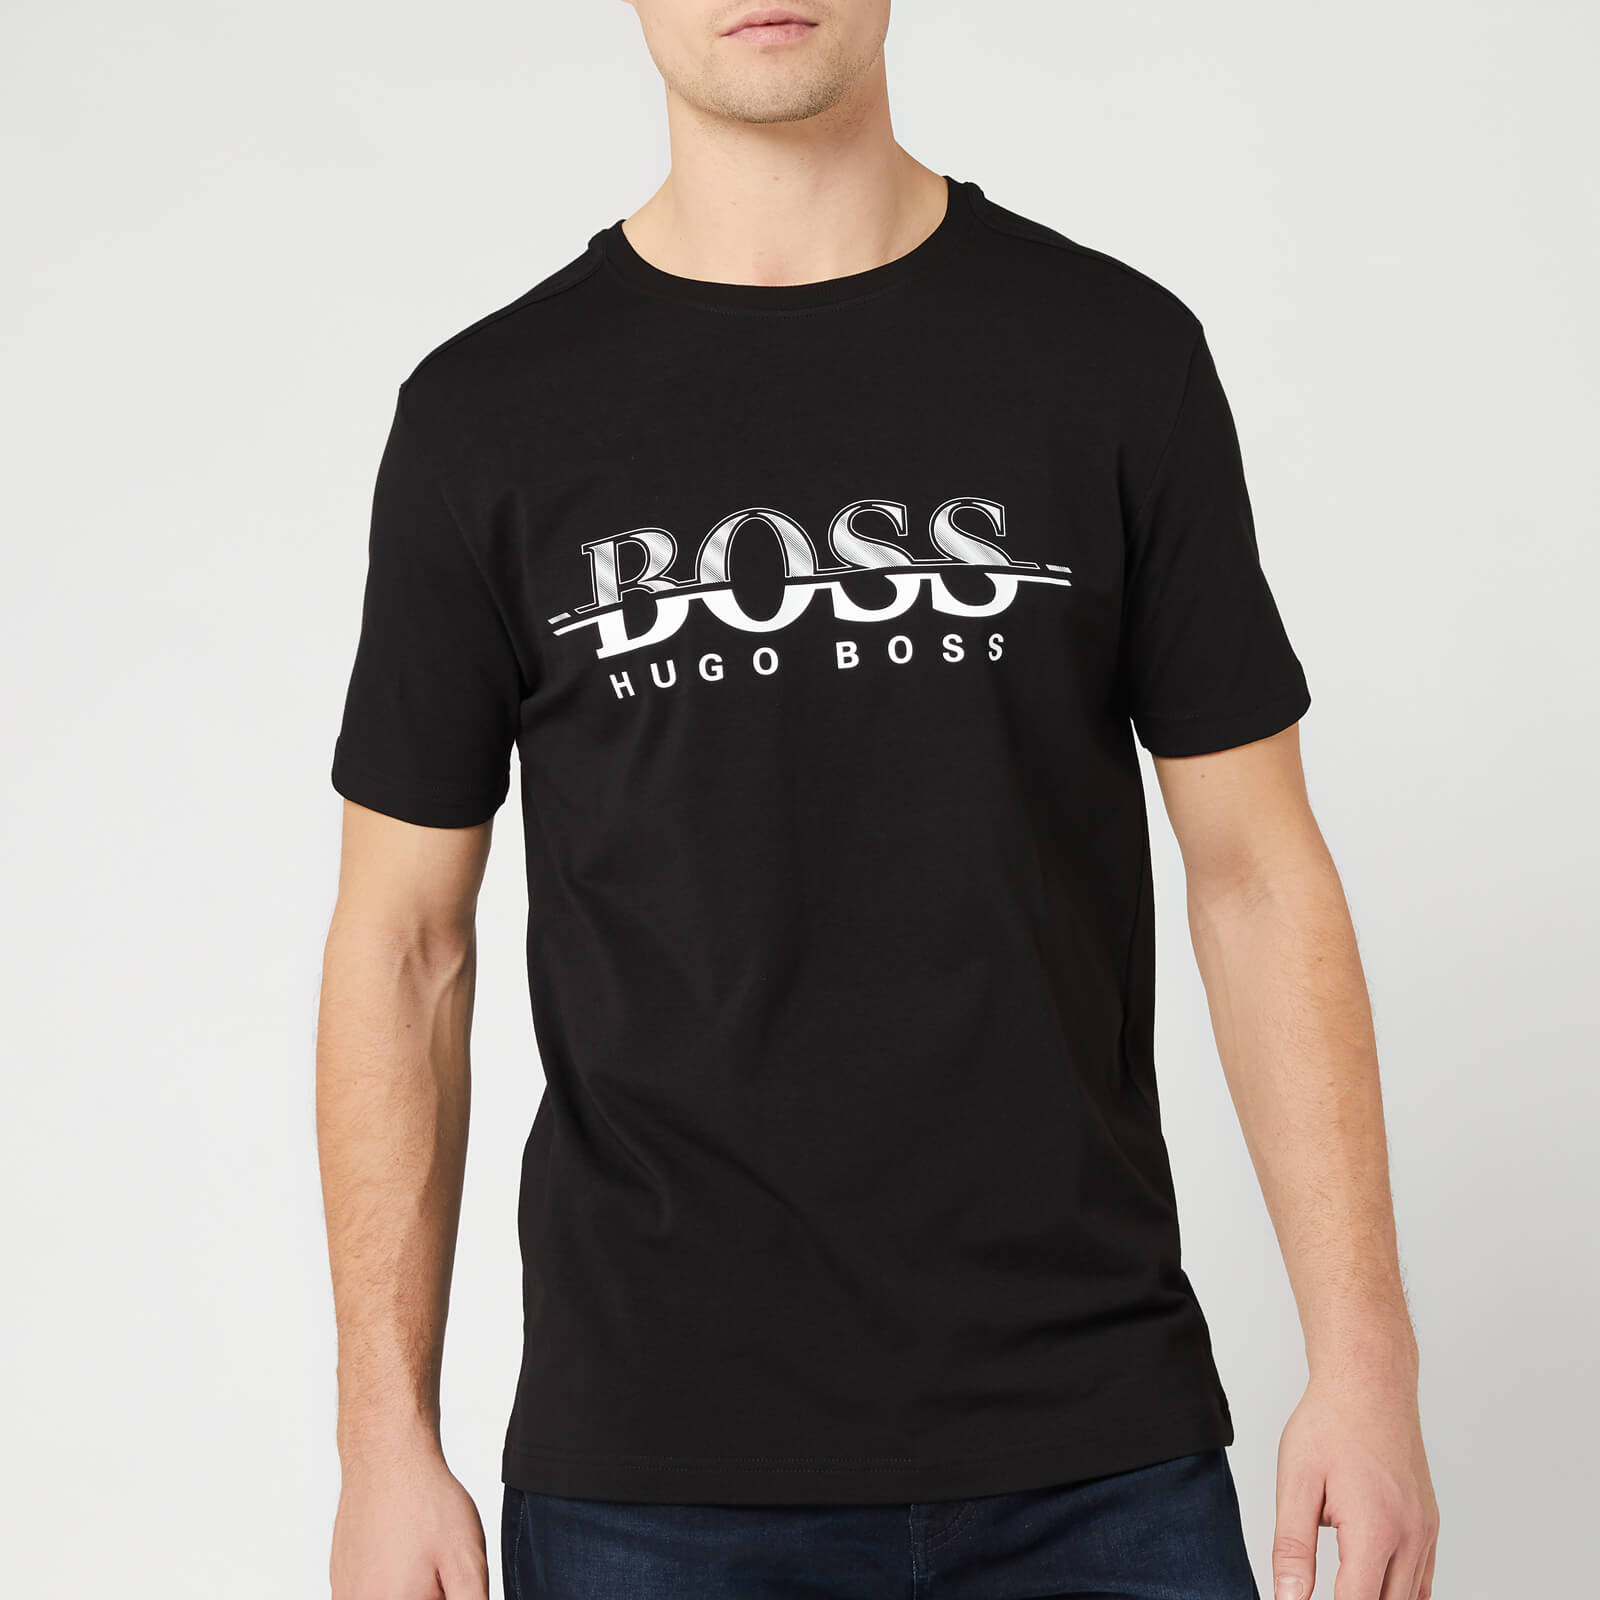 hugo boss mens black shirt